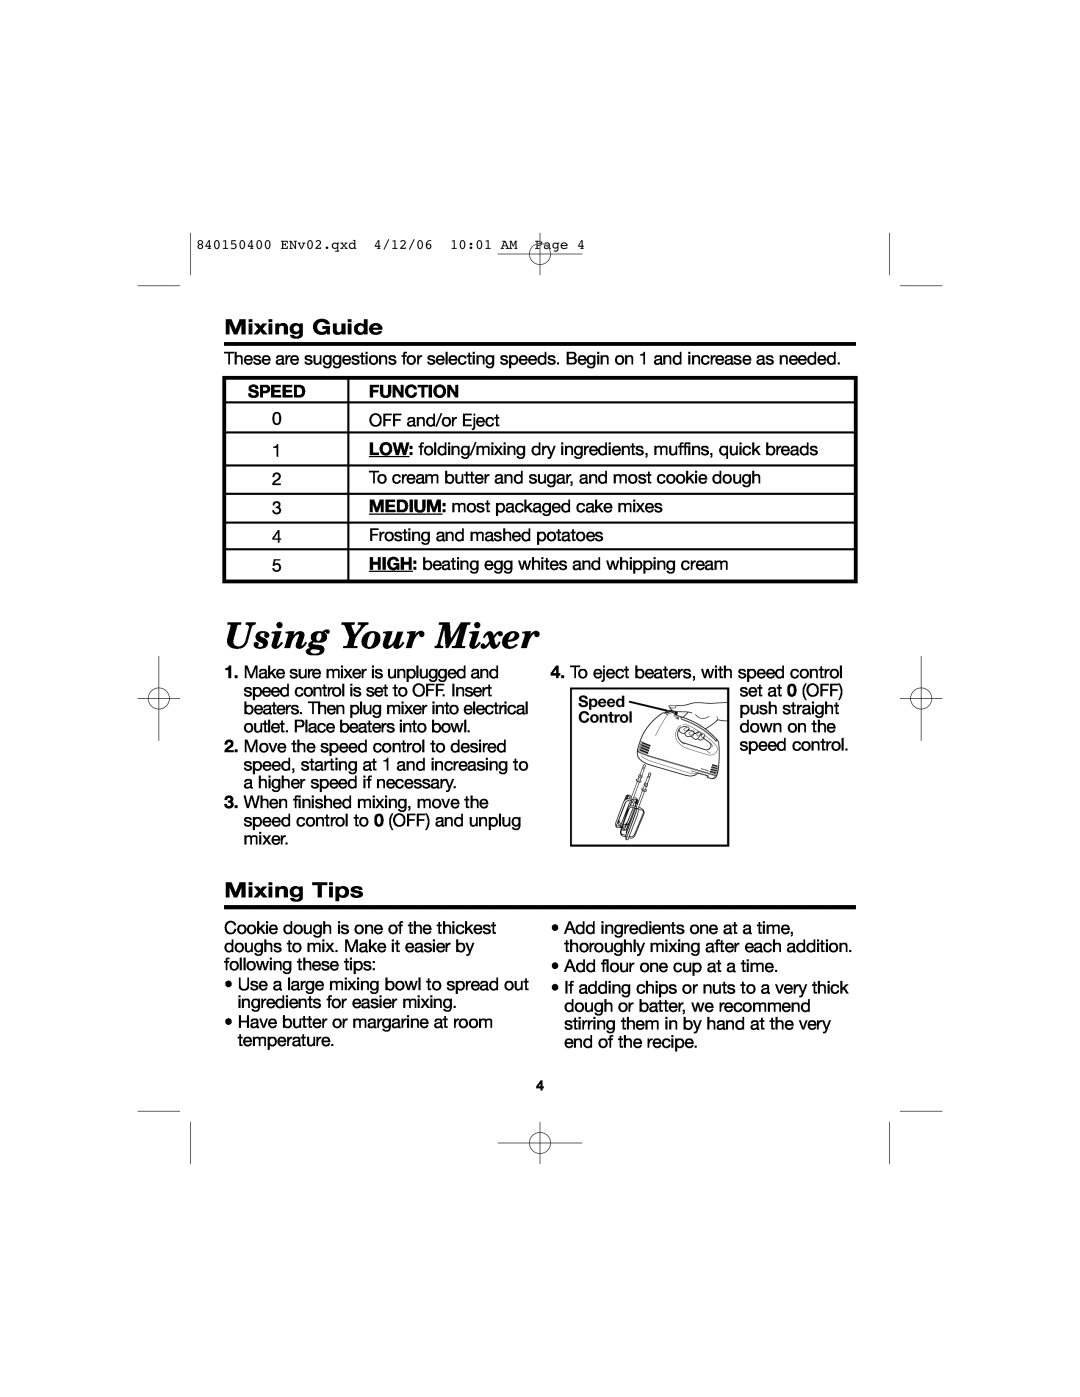 Hamilton Beach 62588, 62515R manual Using Your Mixer, Mixing Guide, Mixing Tips 